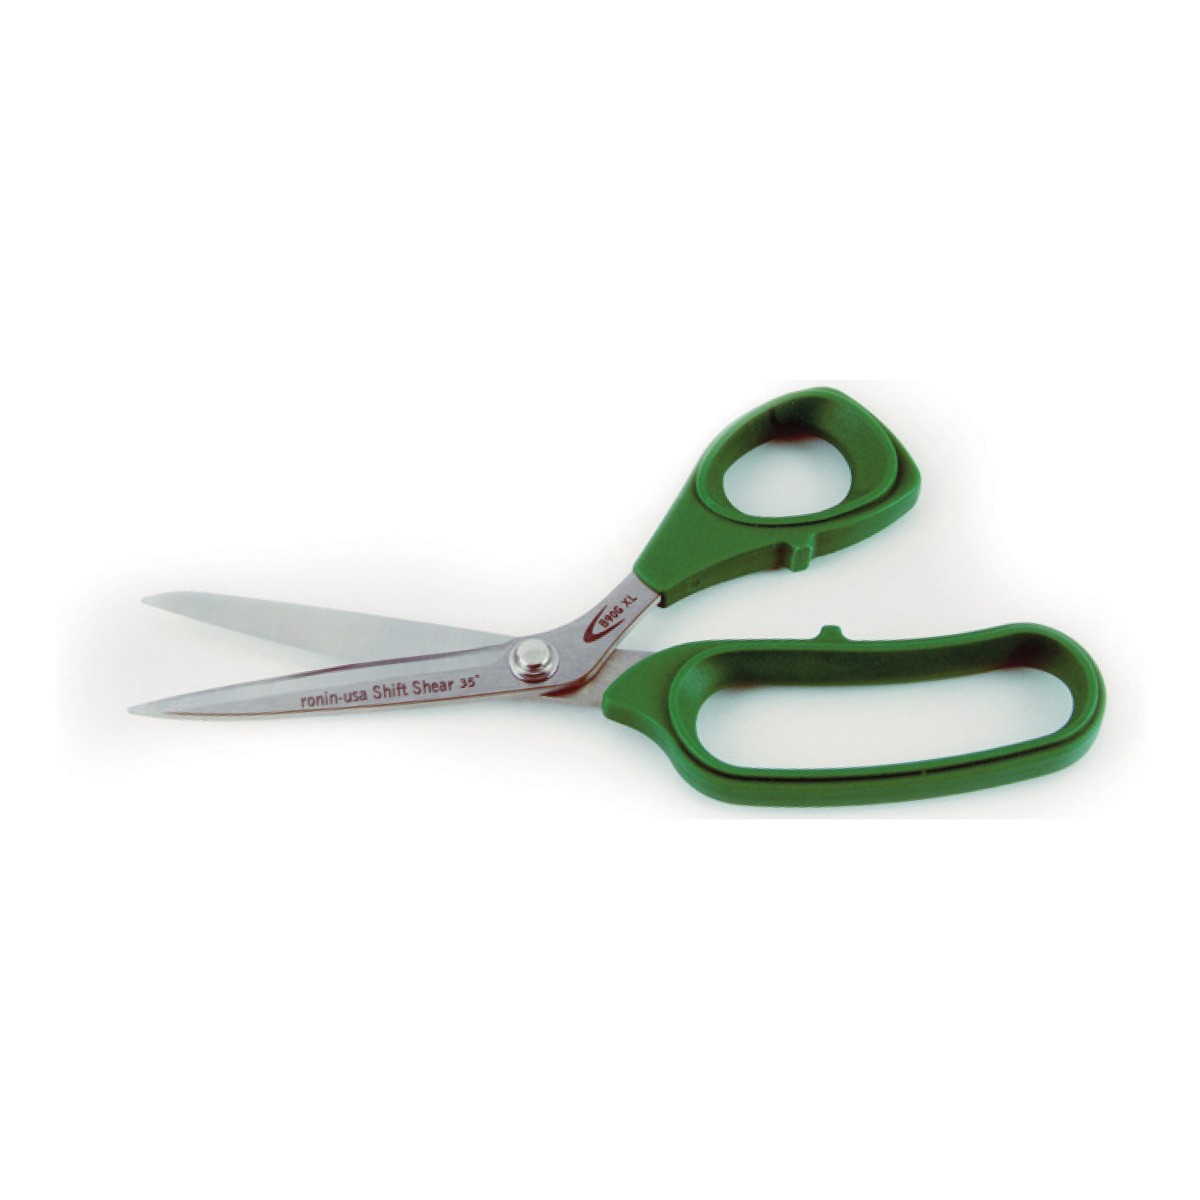 Norpro® Triple Blade Herb Scissors - Green, 1 ct - Ralphs